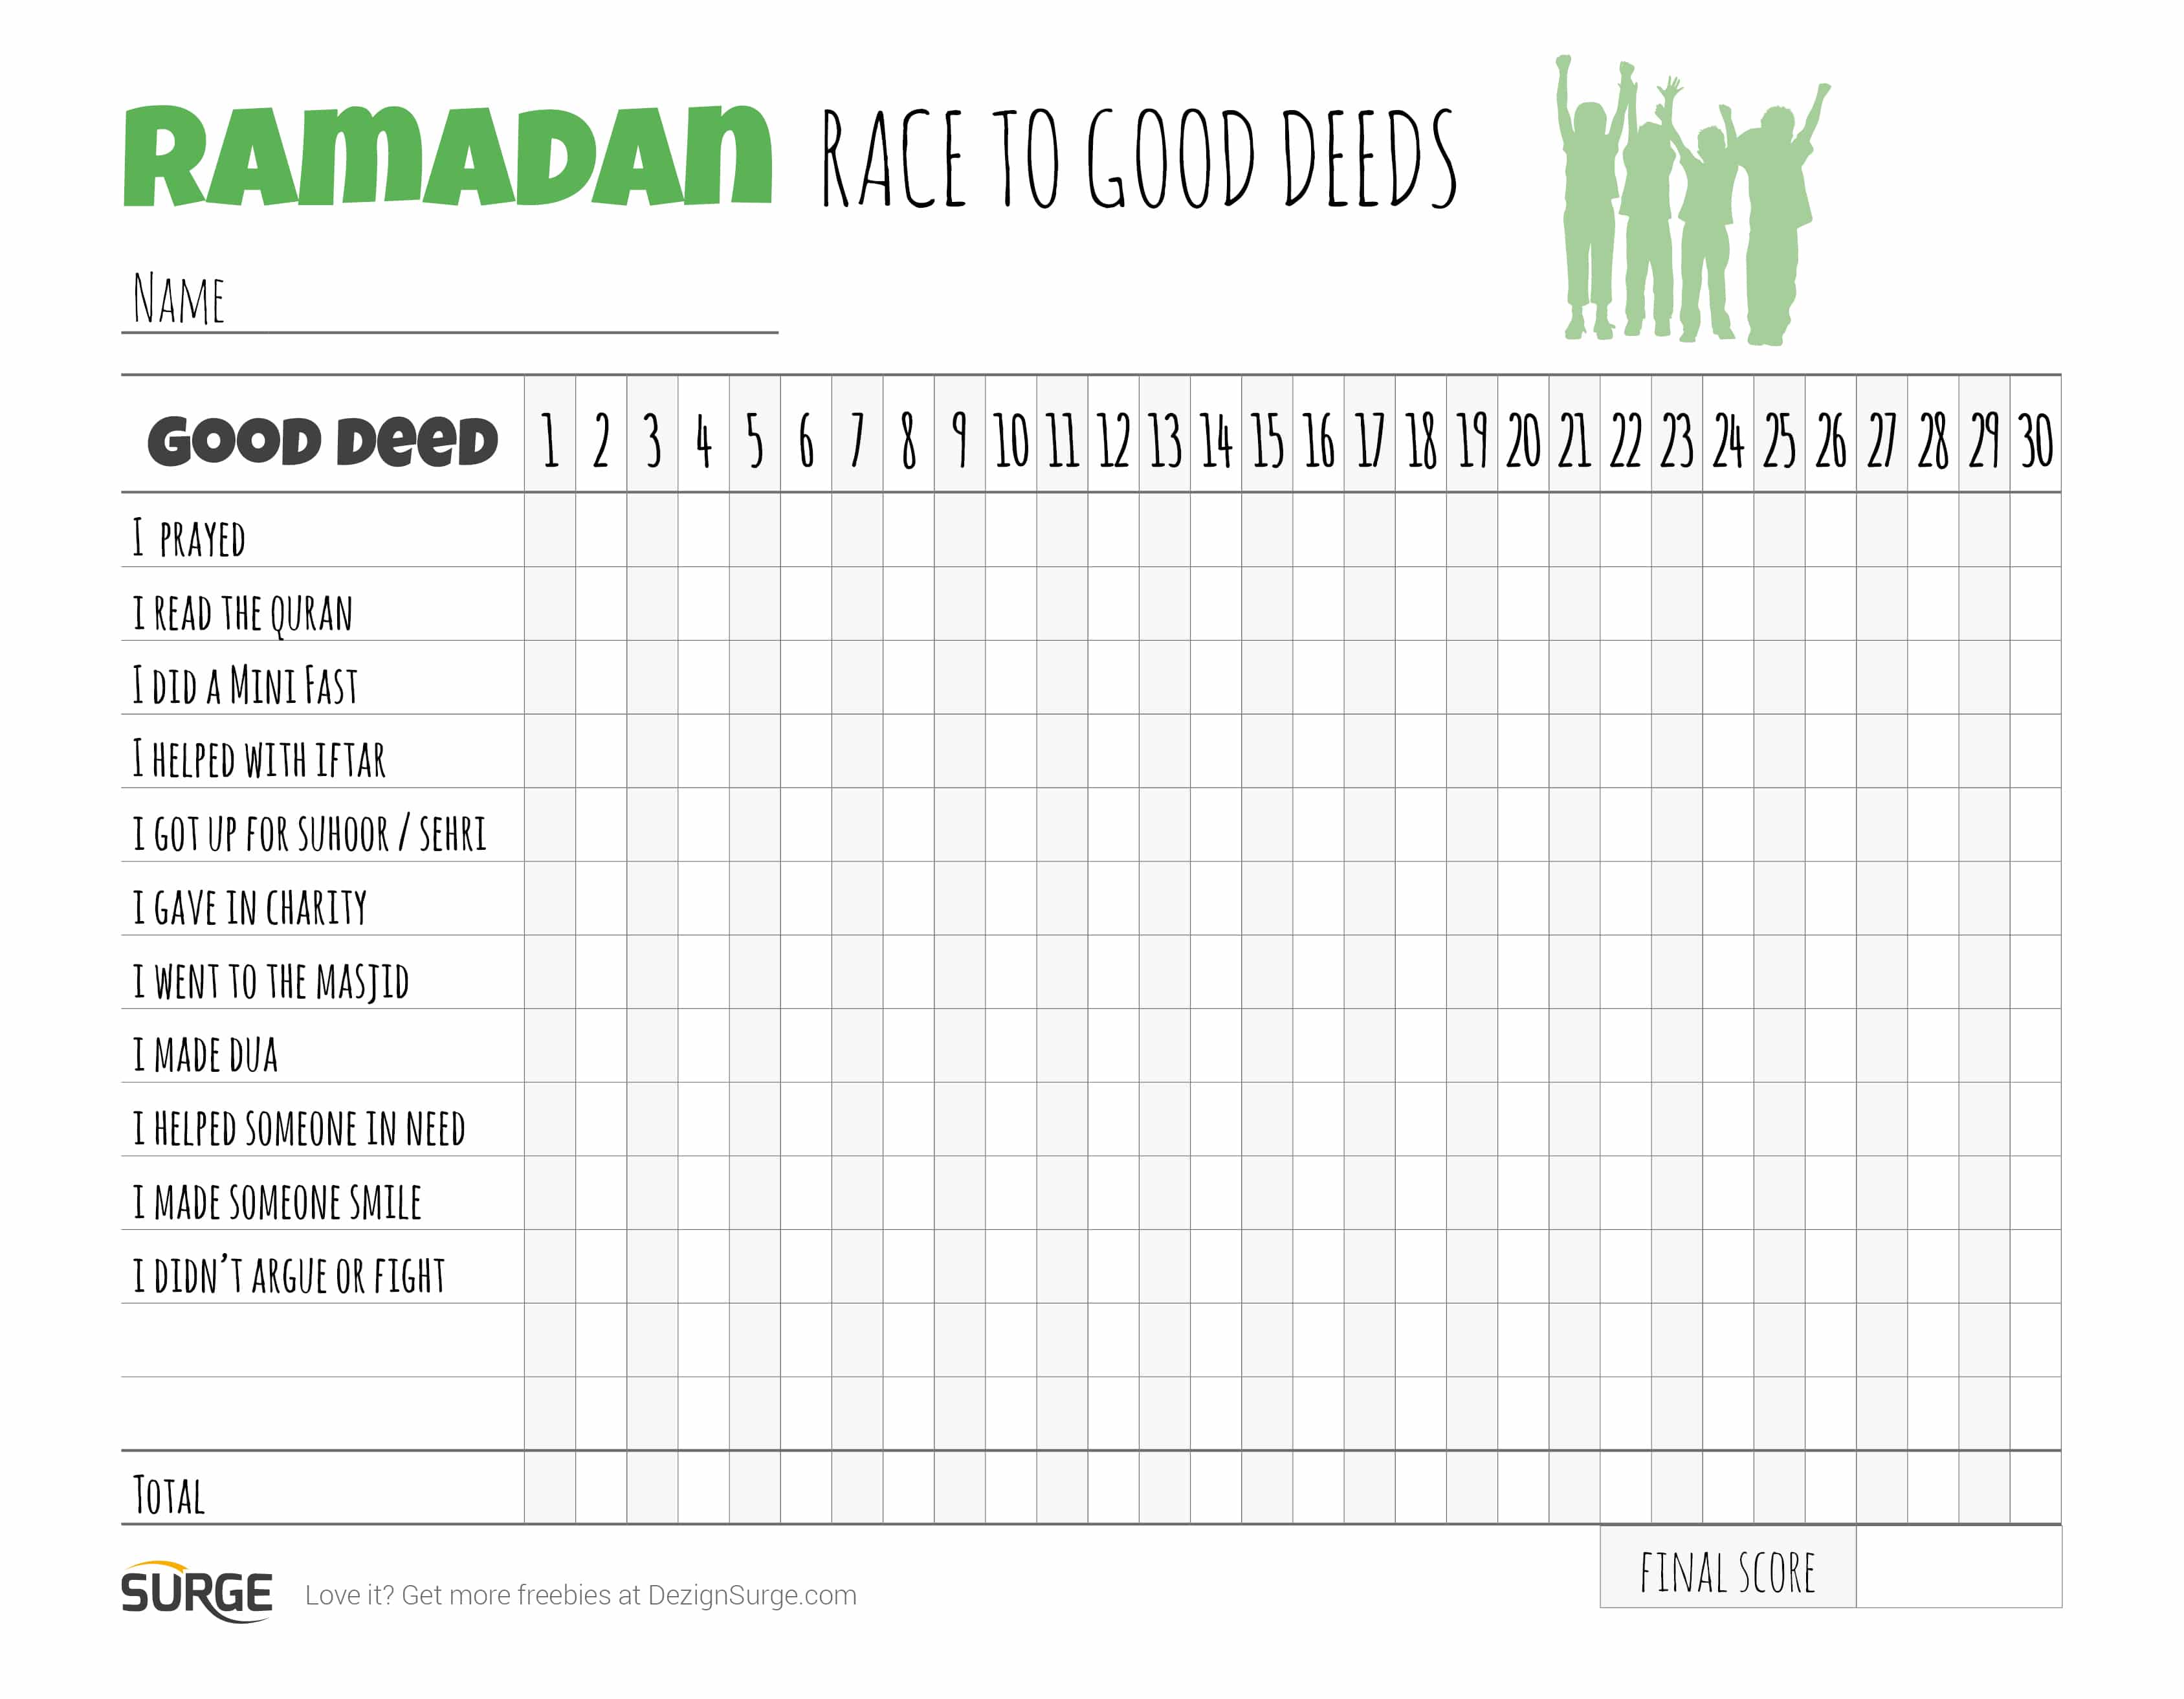 Kids Ramadan Chart